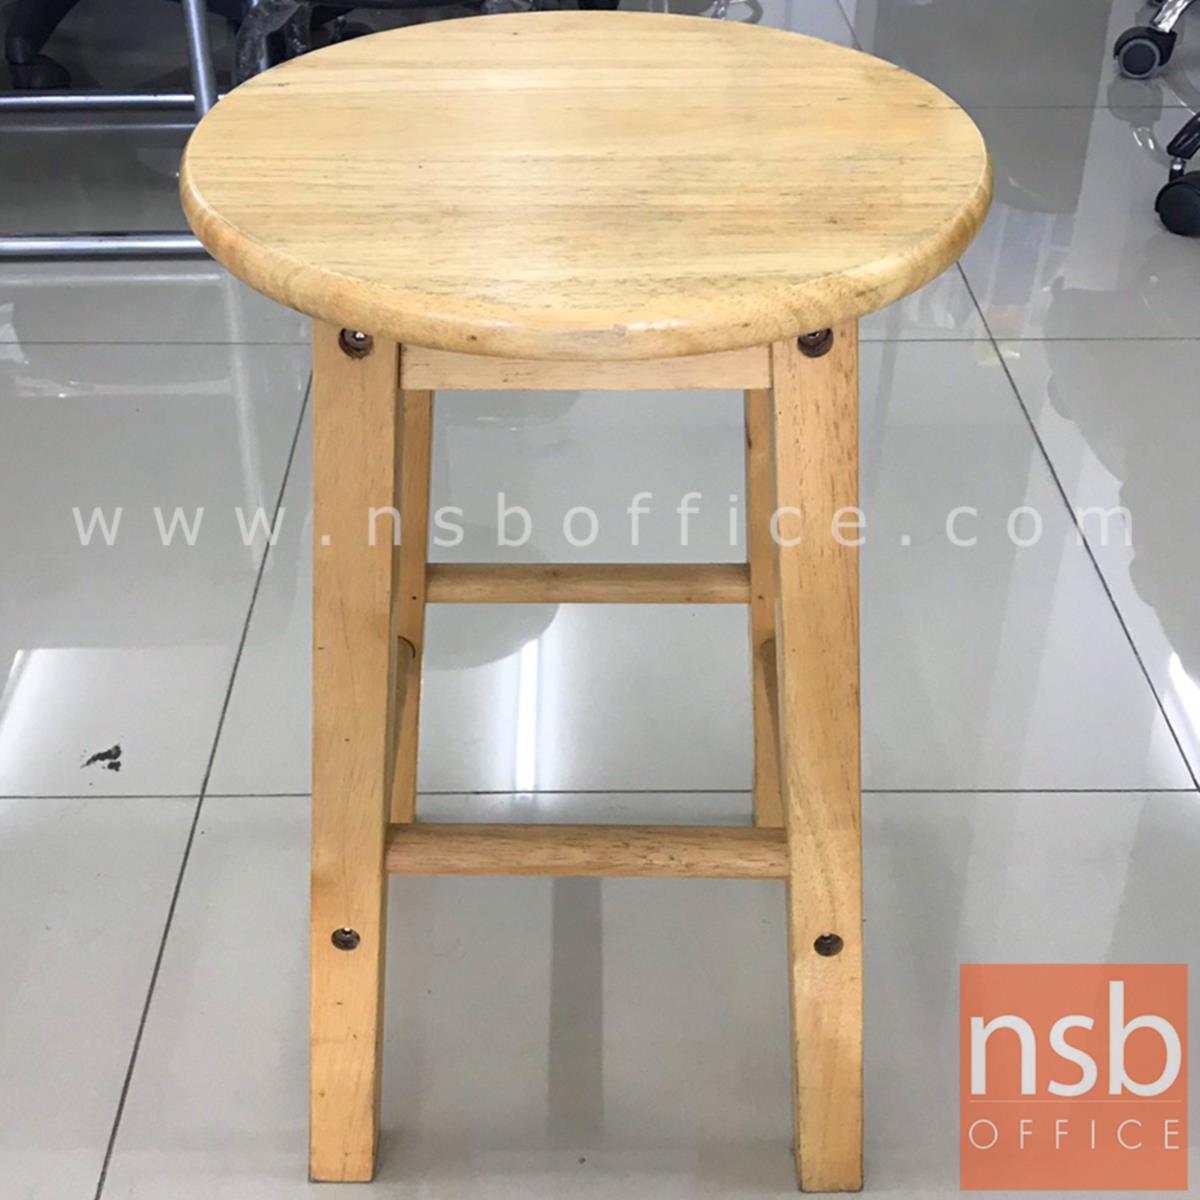 L02A288:เก้าอี้สตูลไม้ล้วน รุ่น NSB-CHAIR3 ขนาด 31Di*47H cm. (STOCK-1 ตัว)